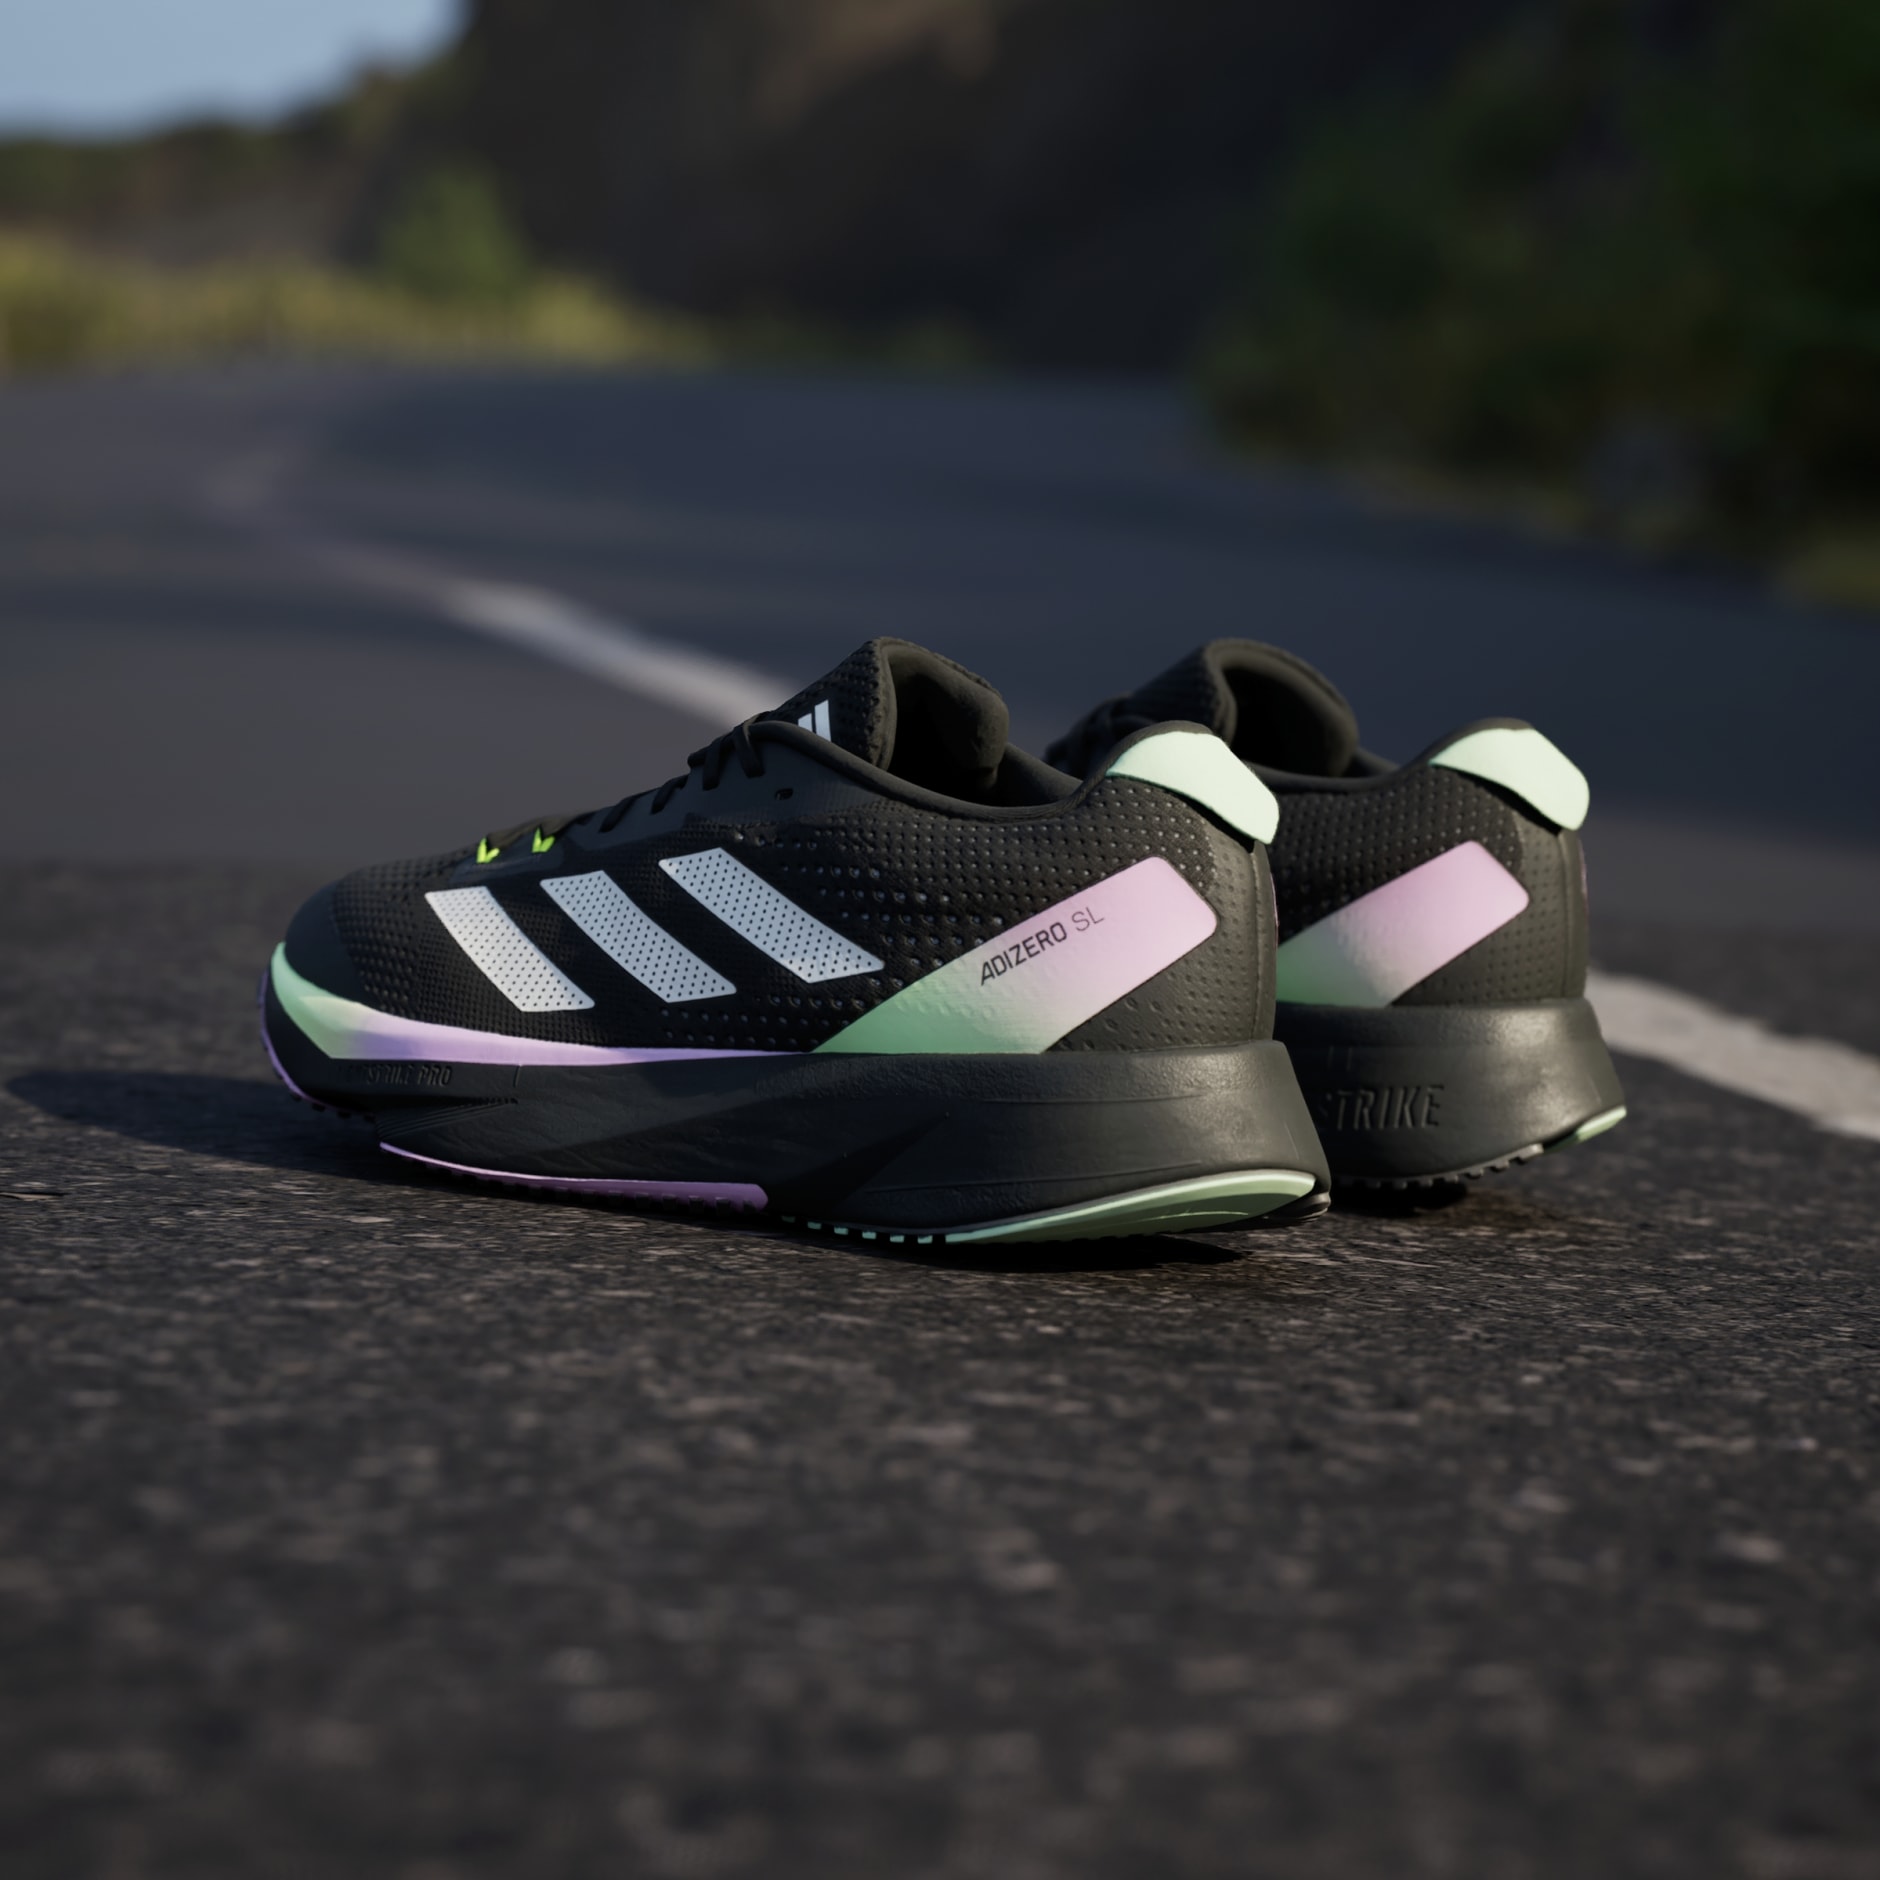 adidas adizero SL Men's Running Shoes - Core Black